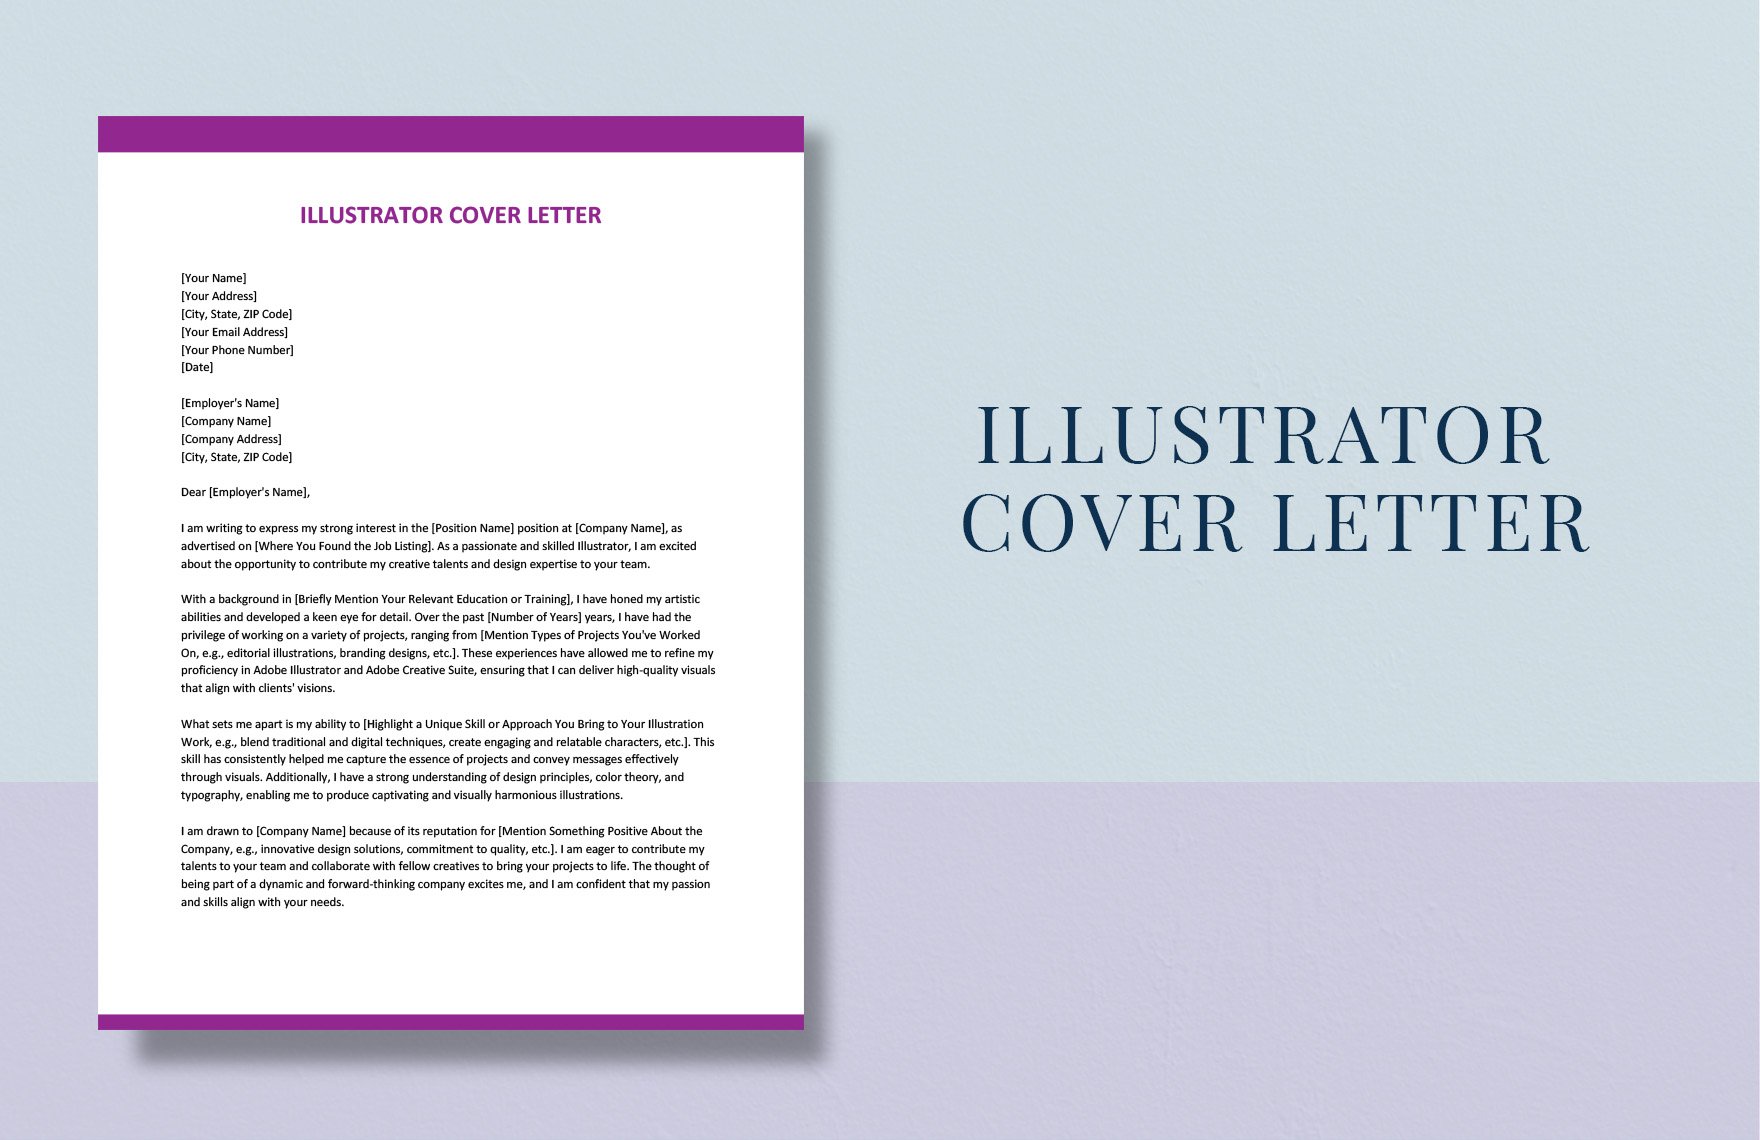 Illustrator Cover Letter in Word, Google Docs